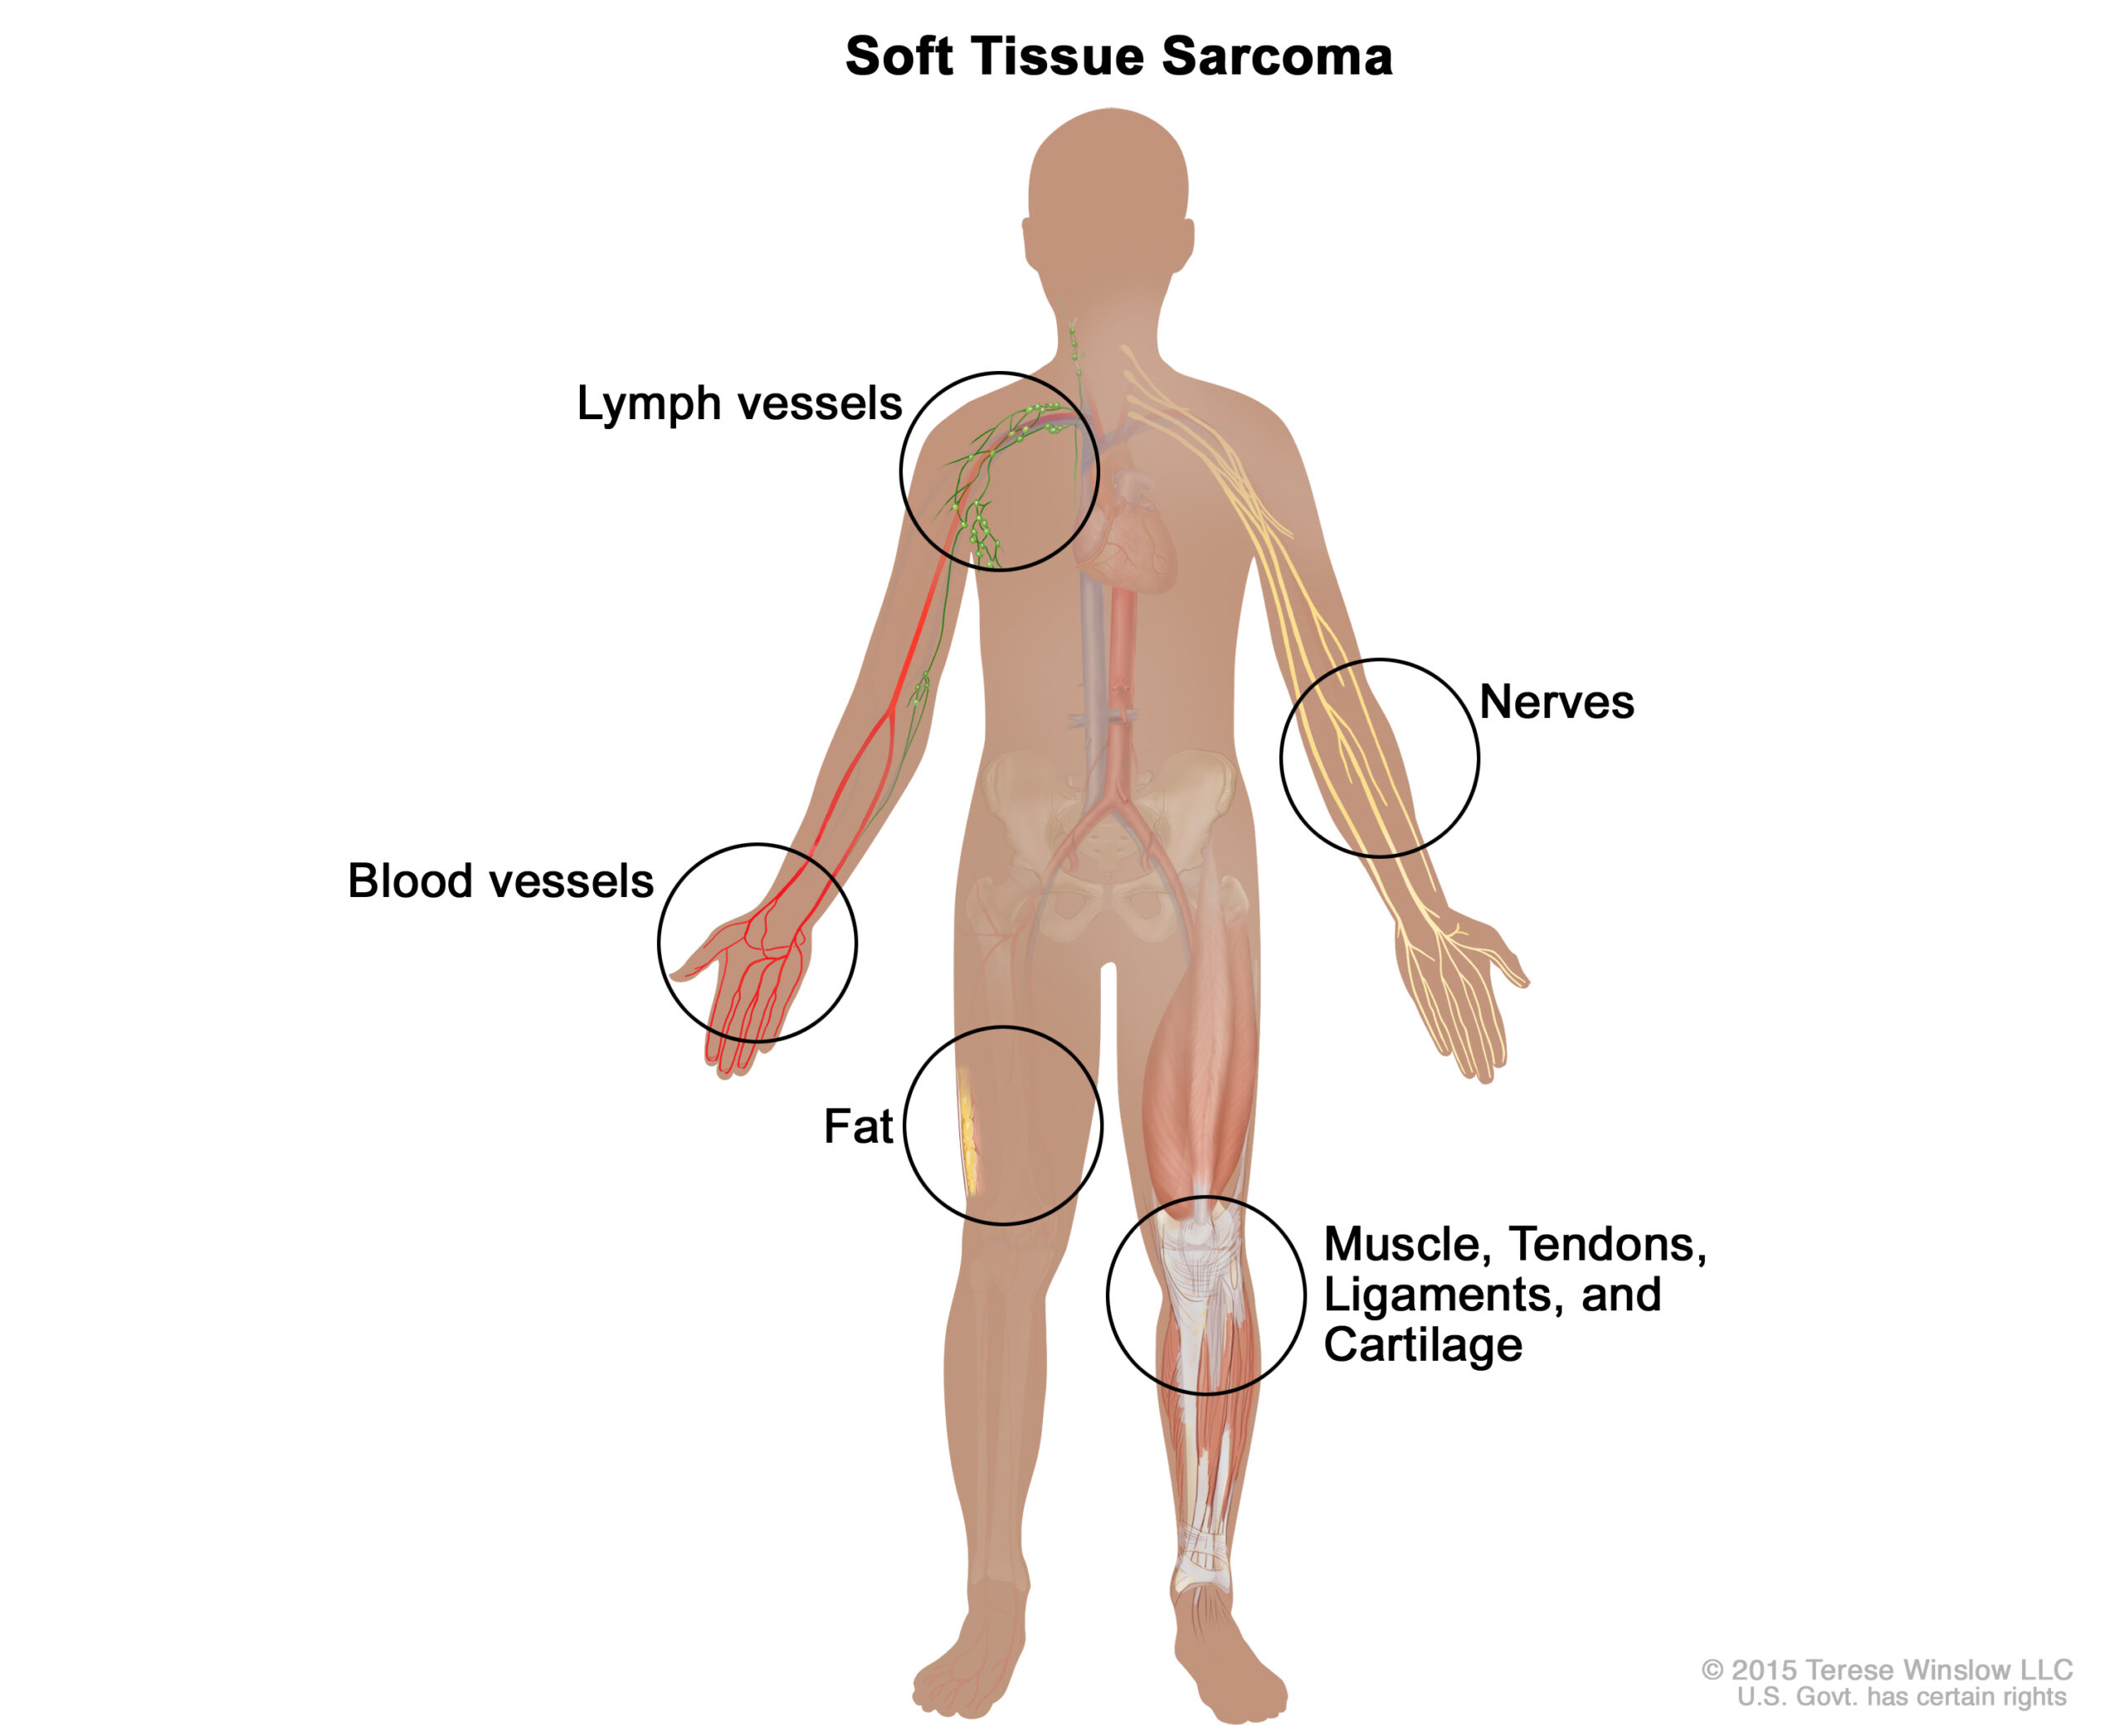 Soft tissue sarcoma common places for development